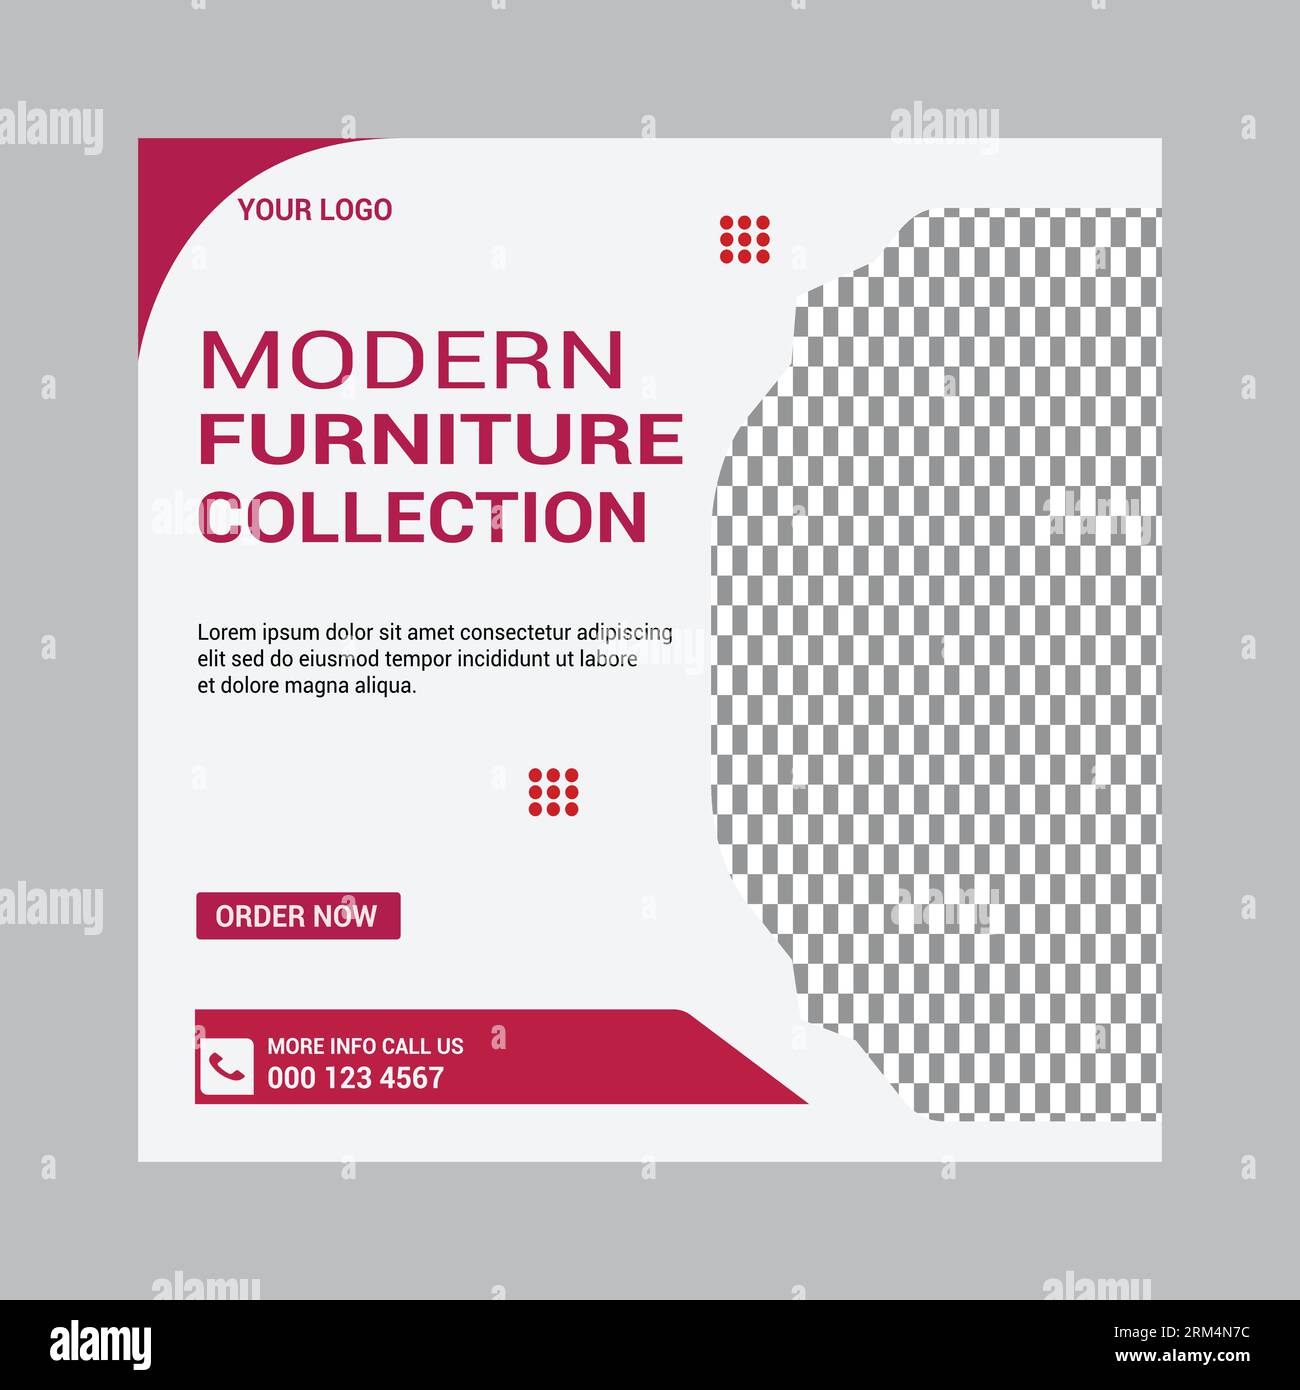 Modern Furniture Collection, Social Media Post Design Stock Vektor